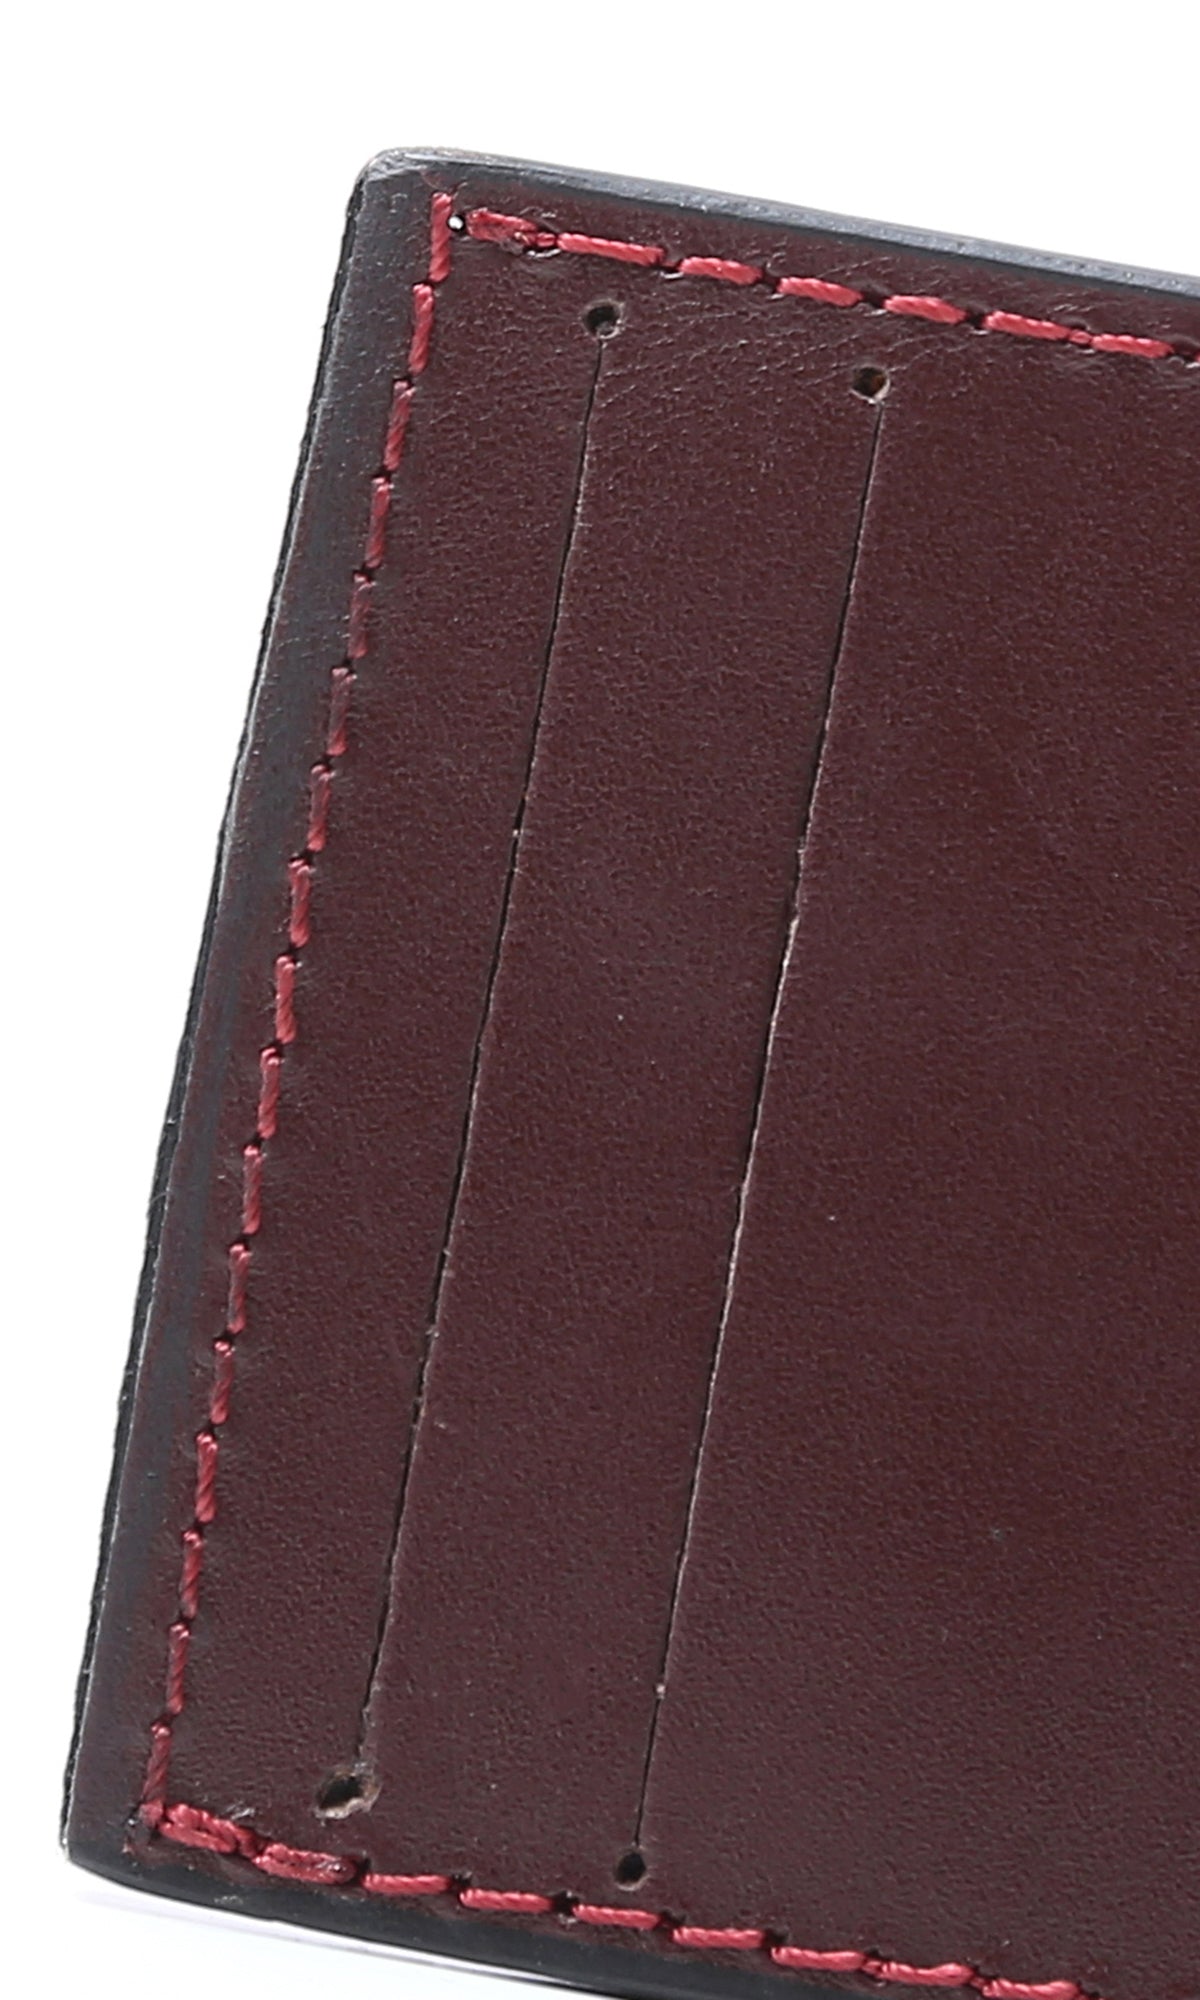 O174863 Stitched Trim Leather Cards Holder - Dark Burgundy